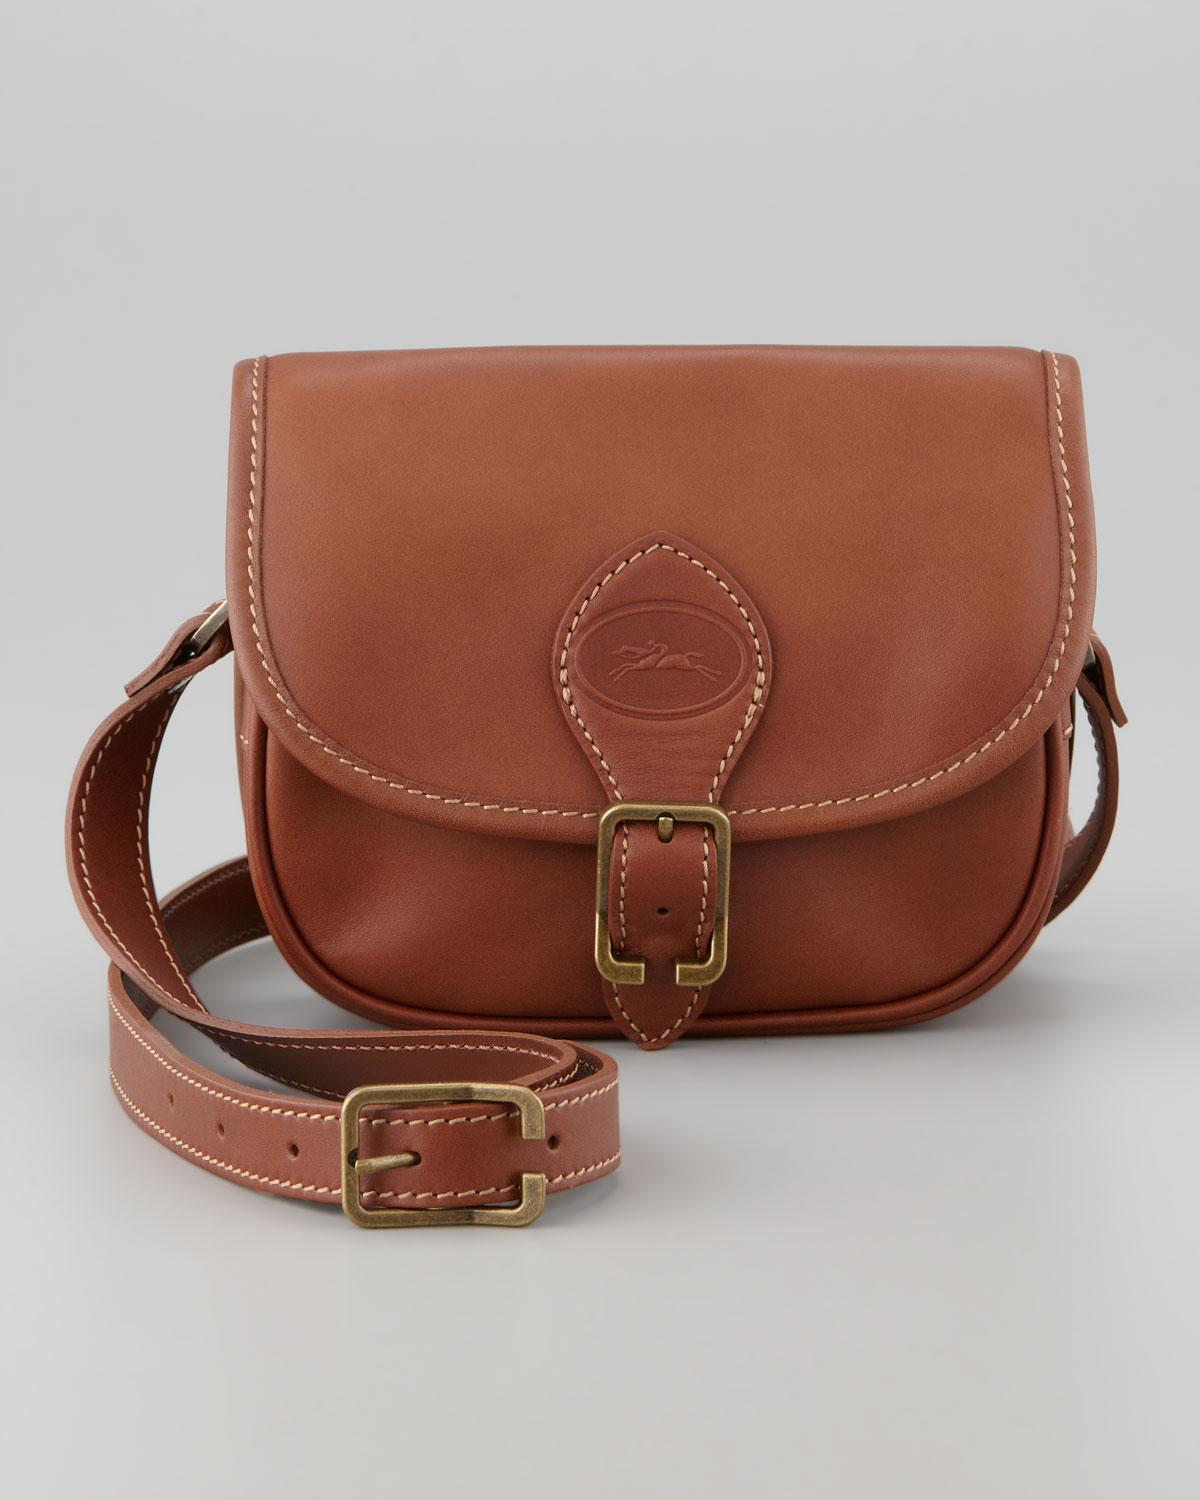 Lyst - Longchamp Cross-Body Bag in Brown